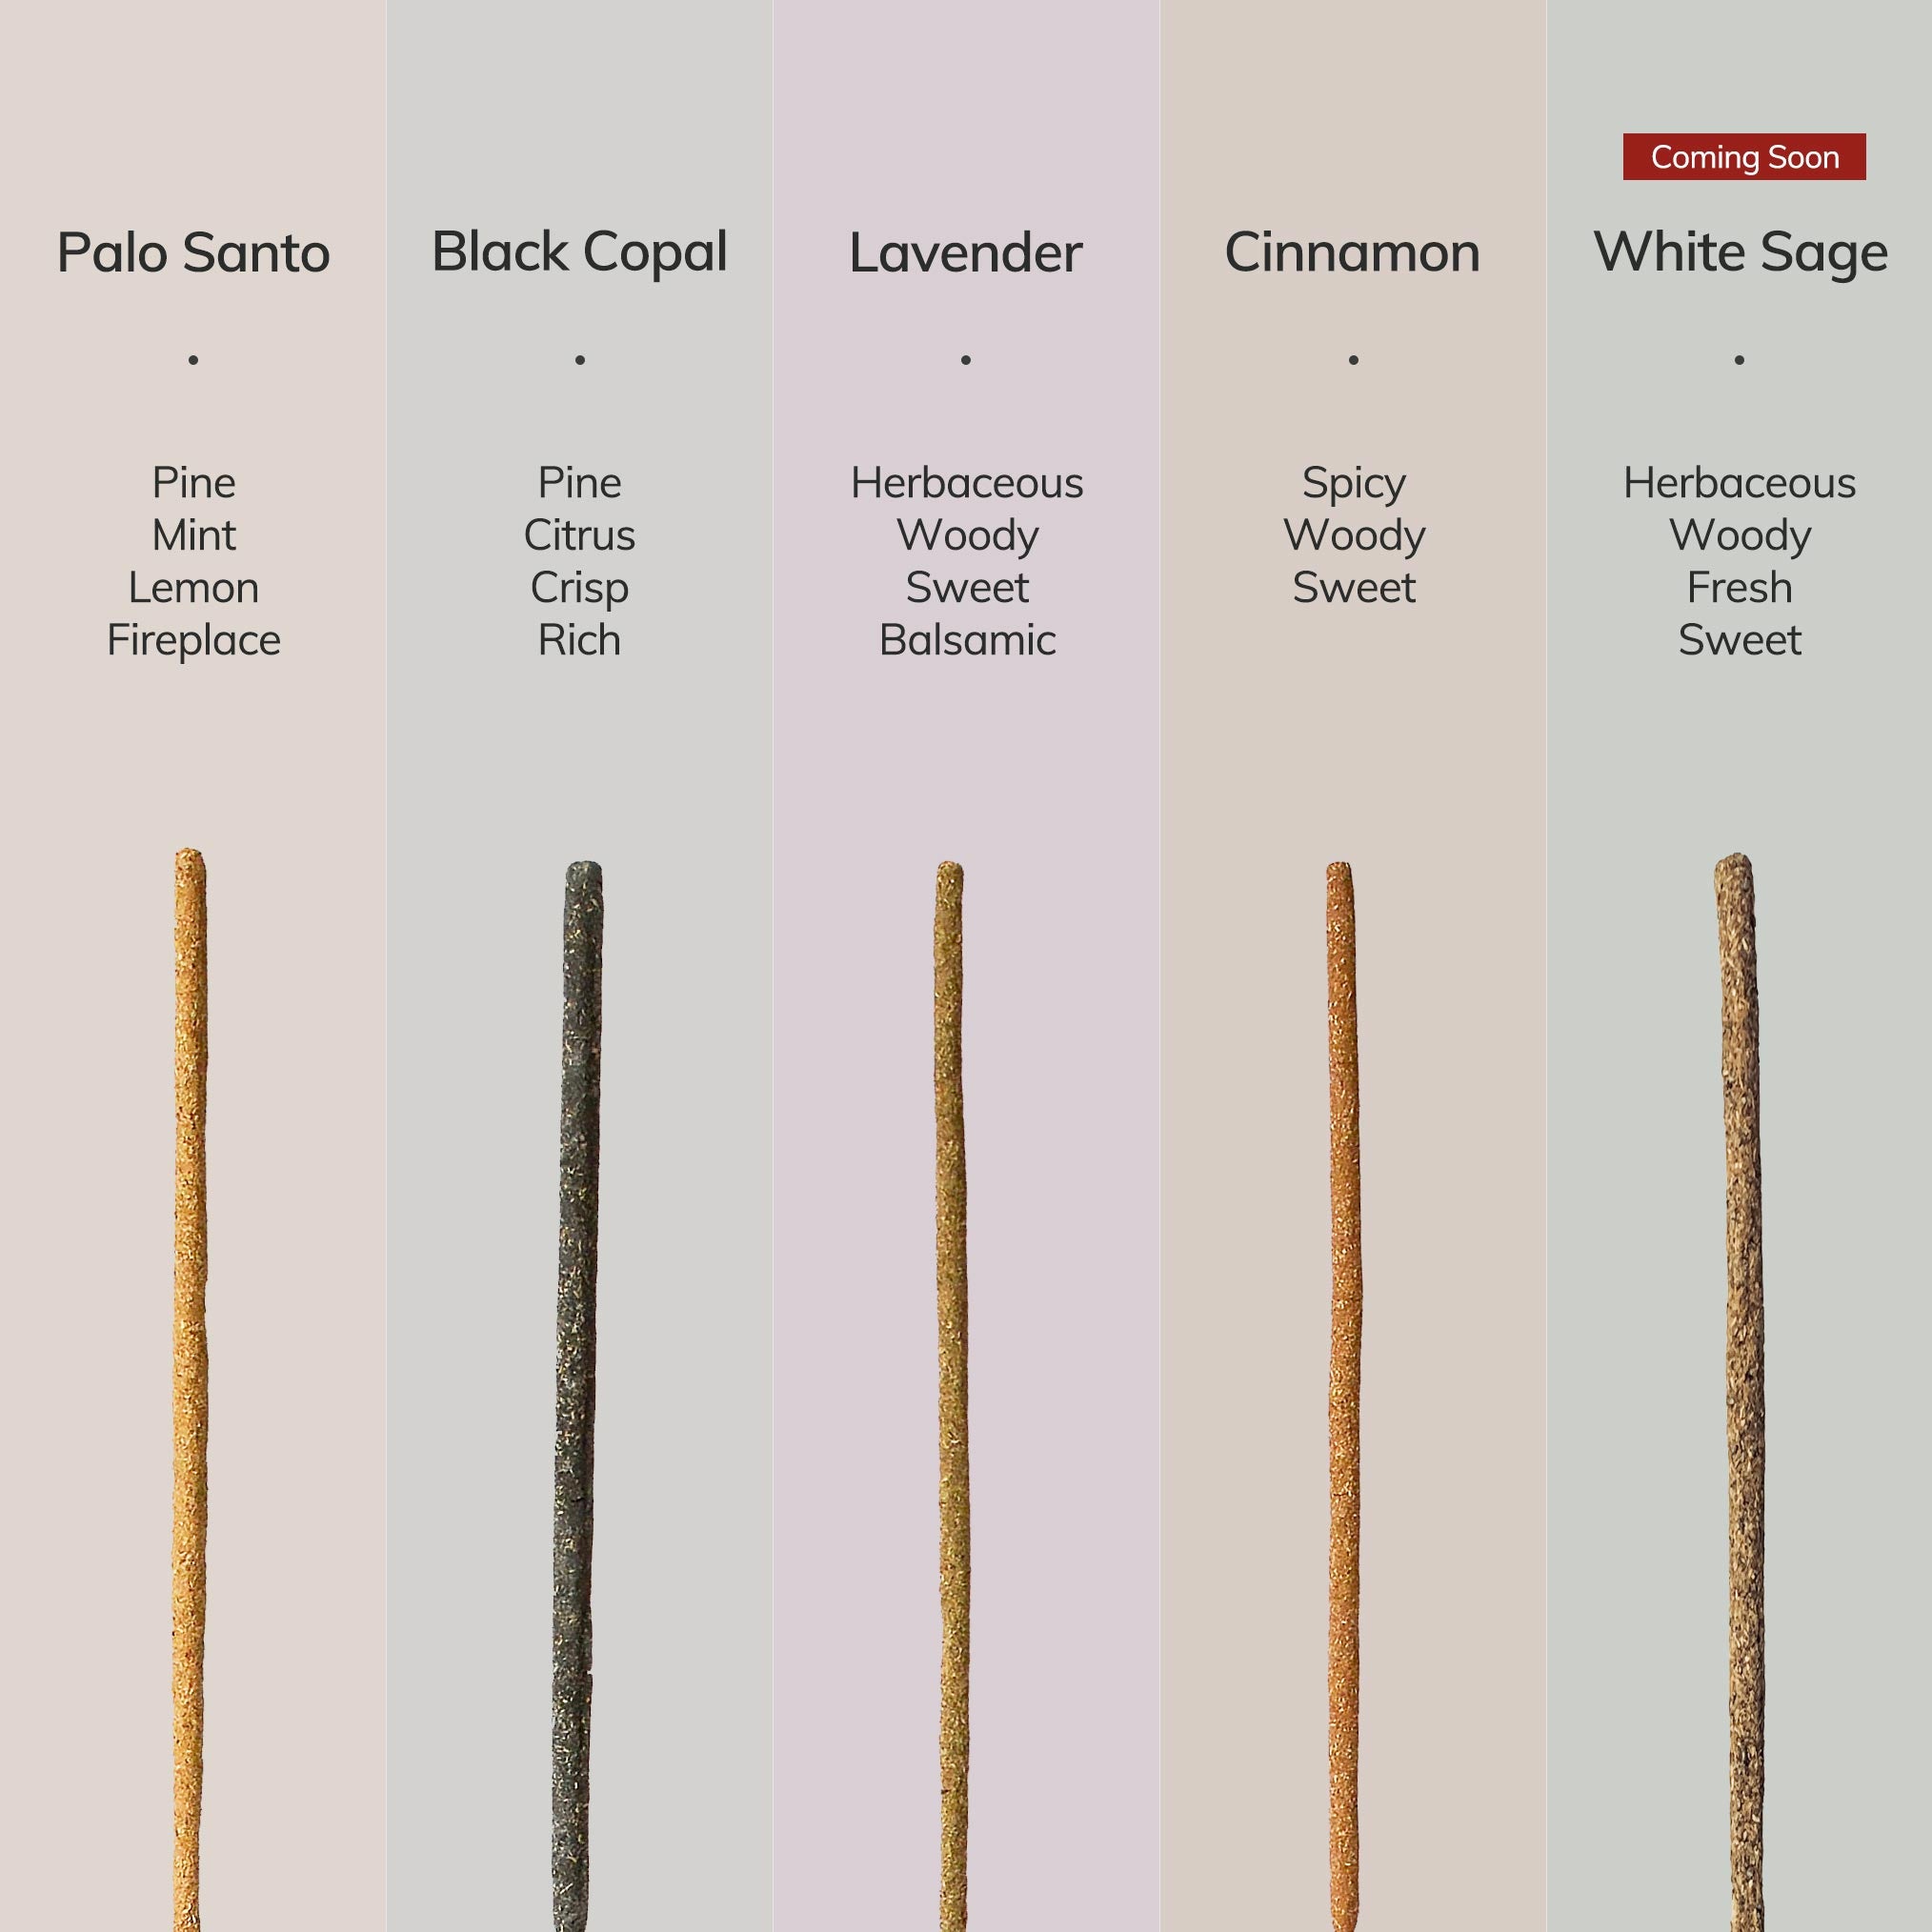 Palo Santo stick, black copal stick, lavender stick, cinnamon stick, and white sage stick